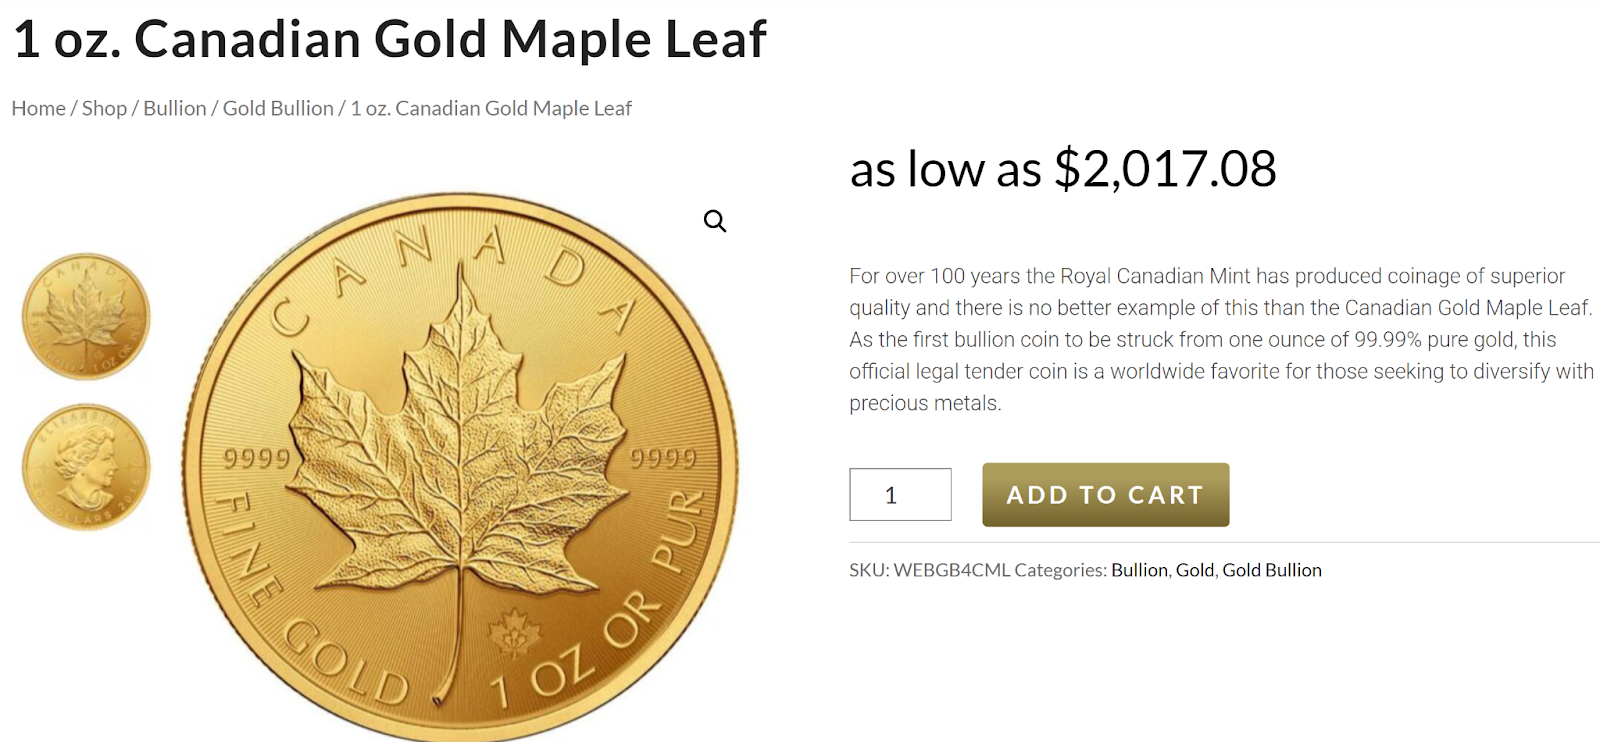 USMR Canadian Gold Maple Leaf prices on their website